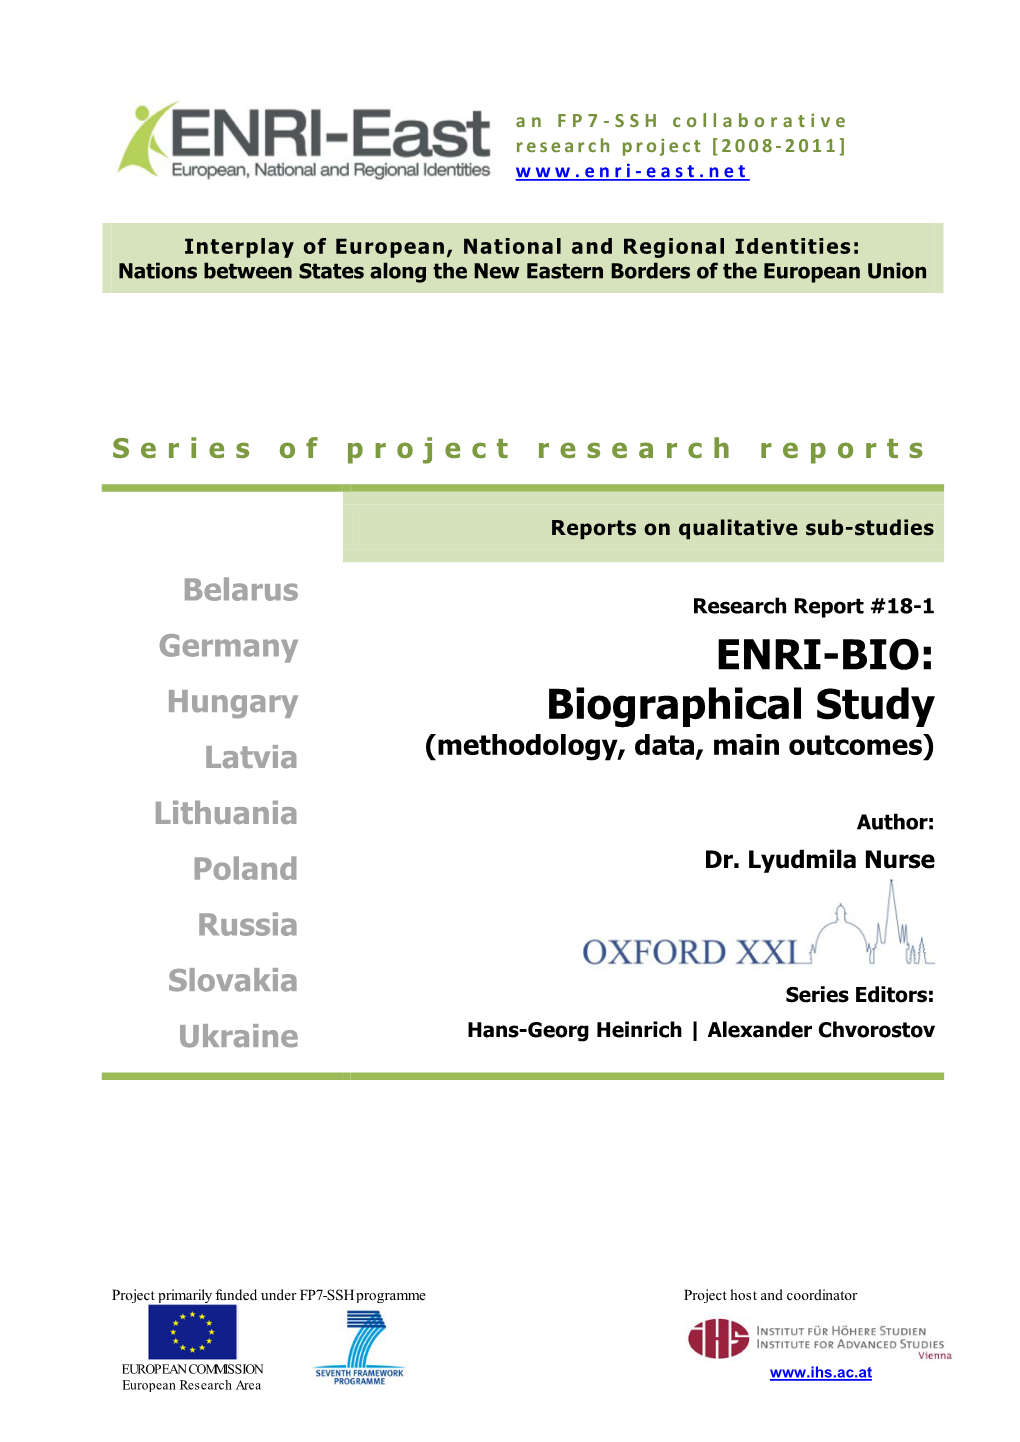 Biographical Study Latvia (Methodology, Data, Main Outcomes)